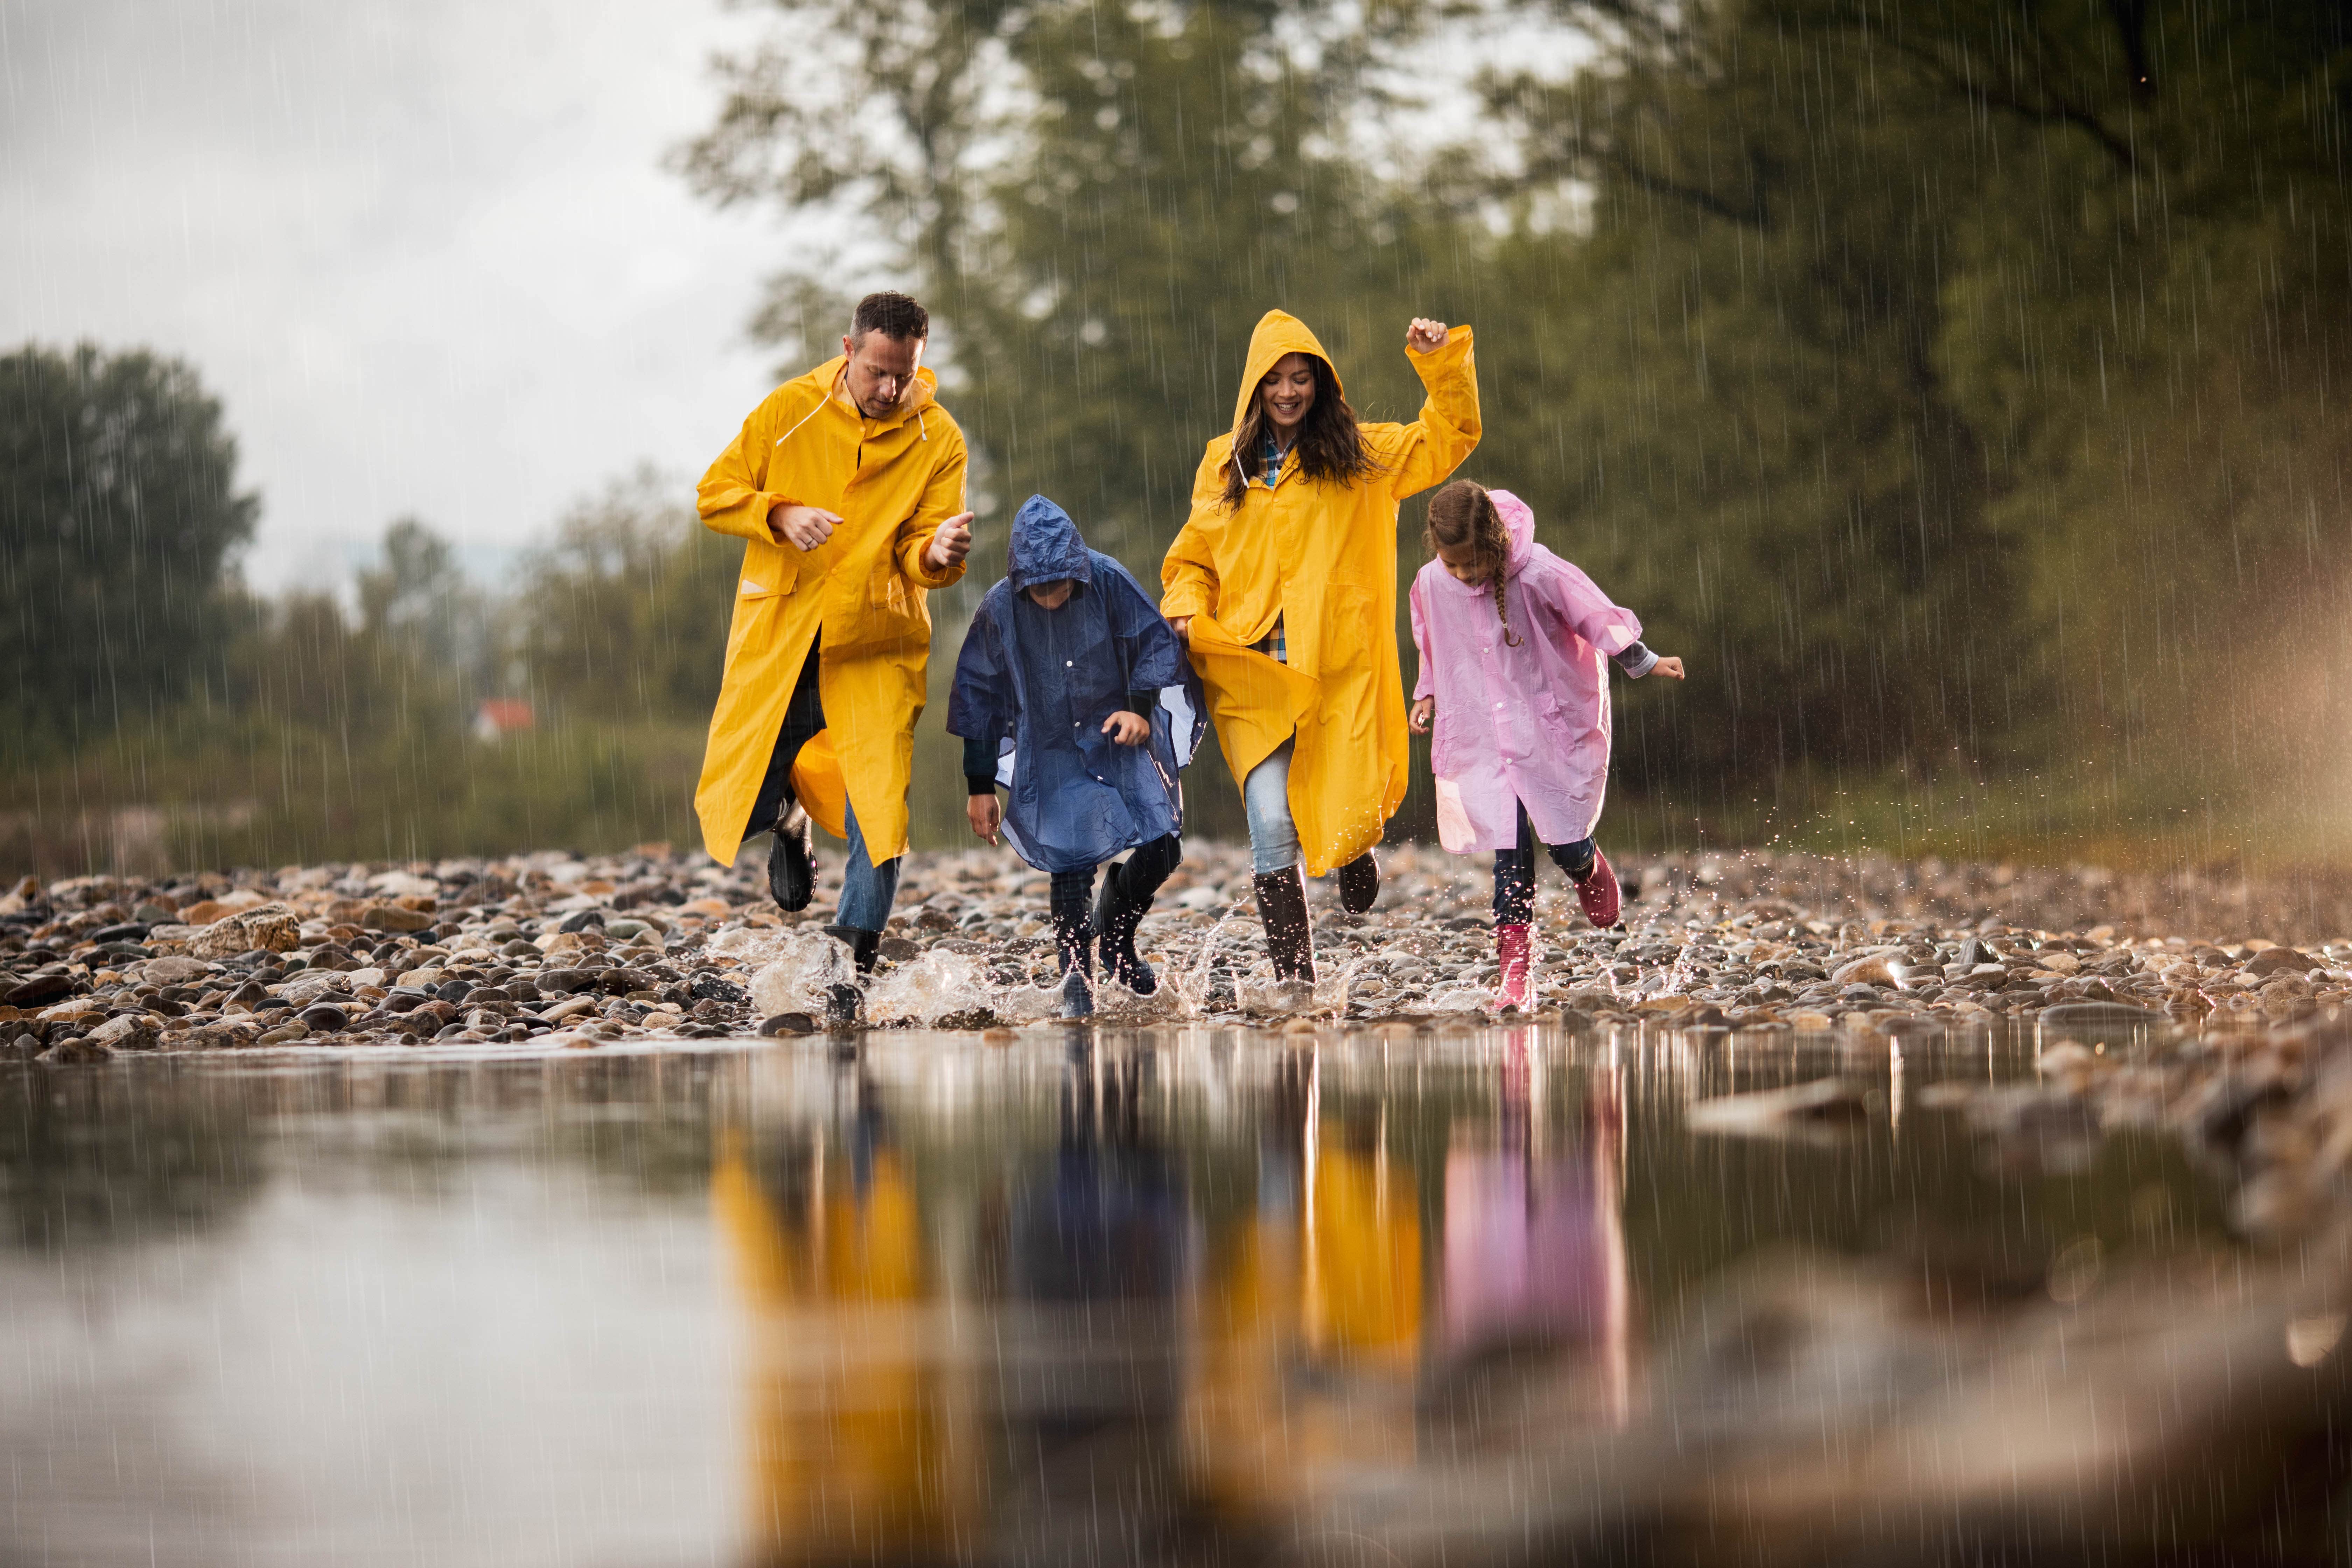 Family dancing in rain wearing rain gear